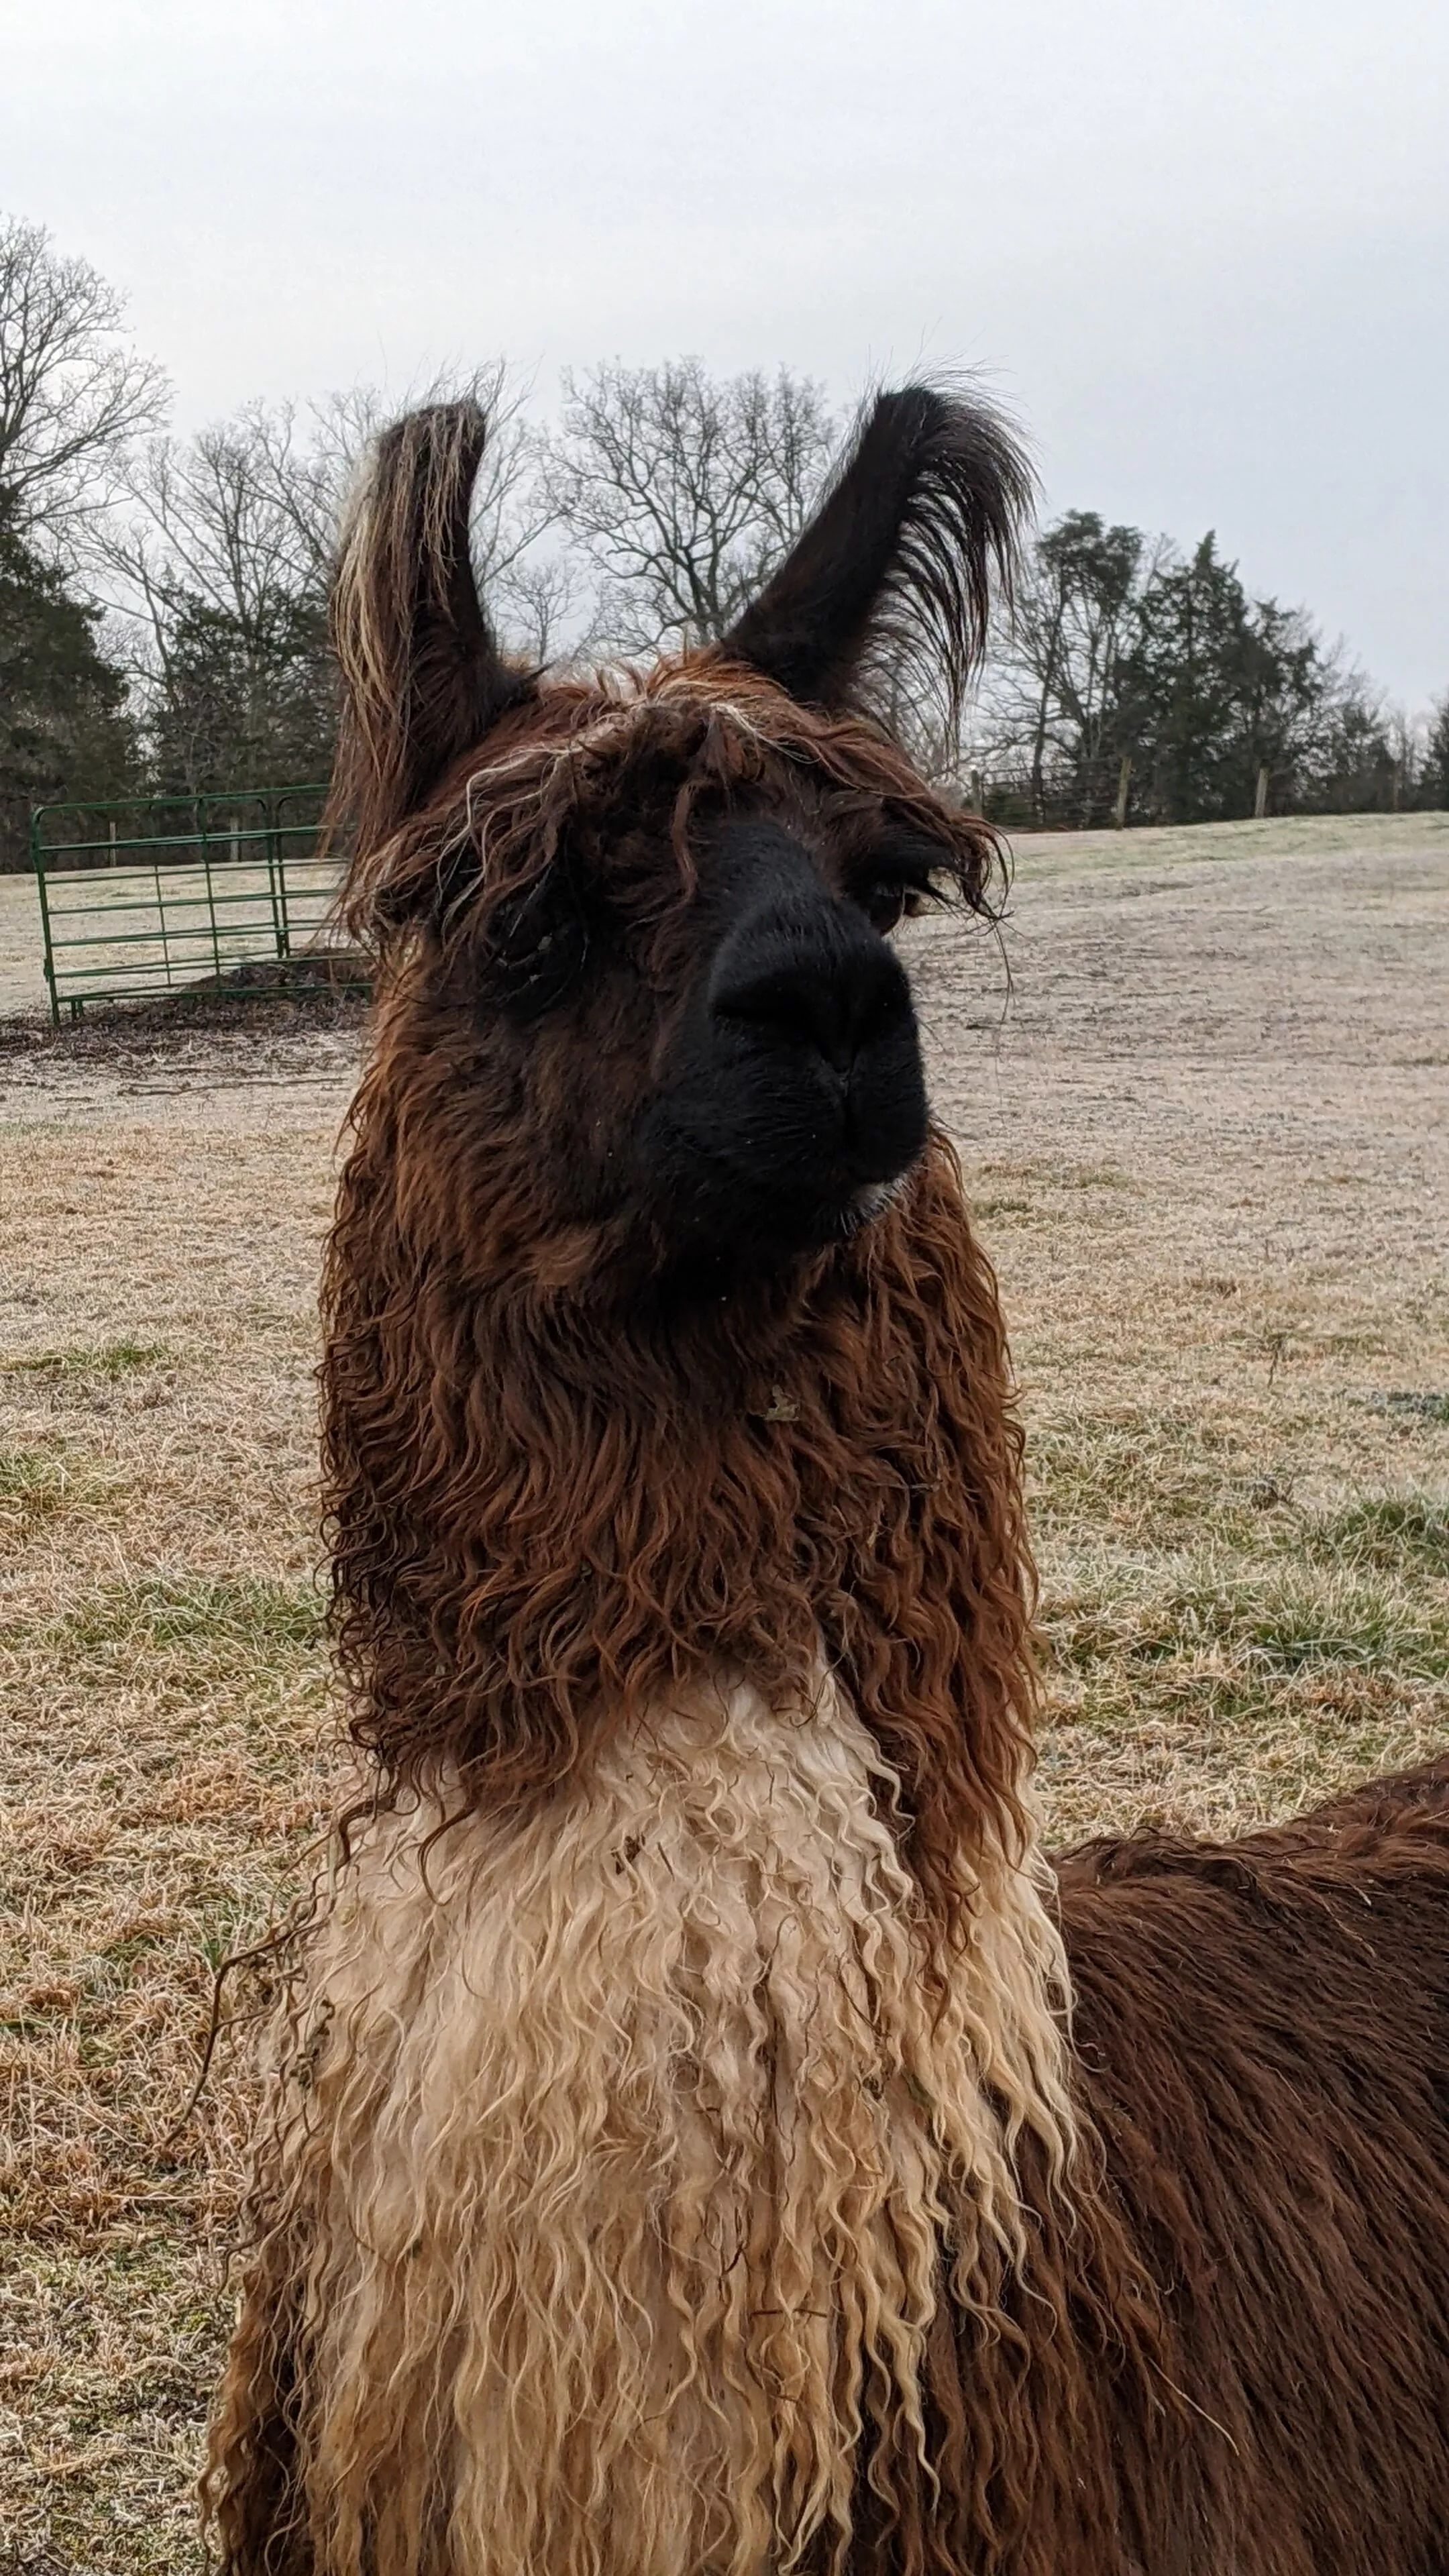 An image of a llama named Racer